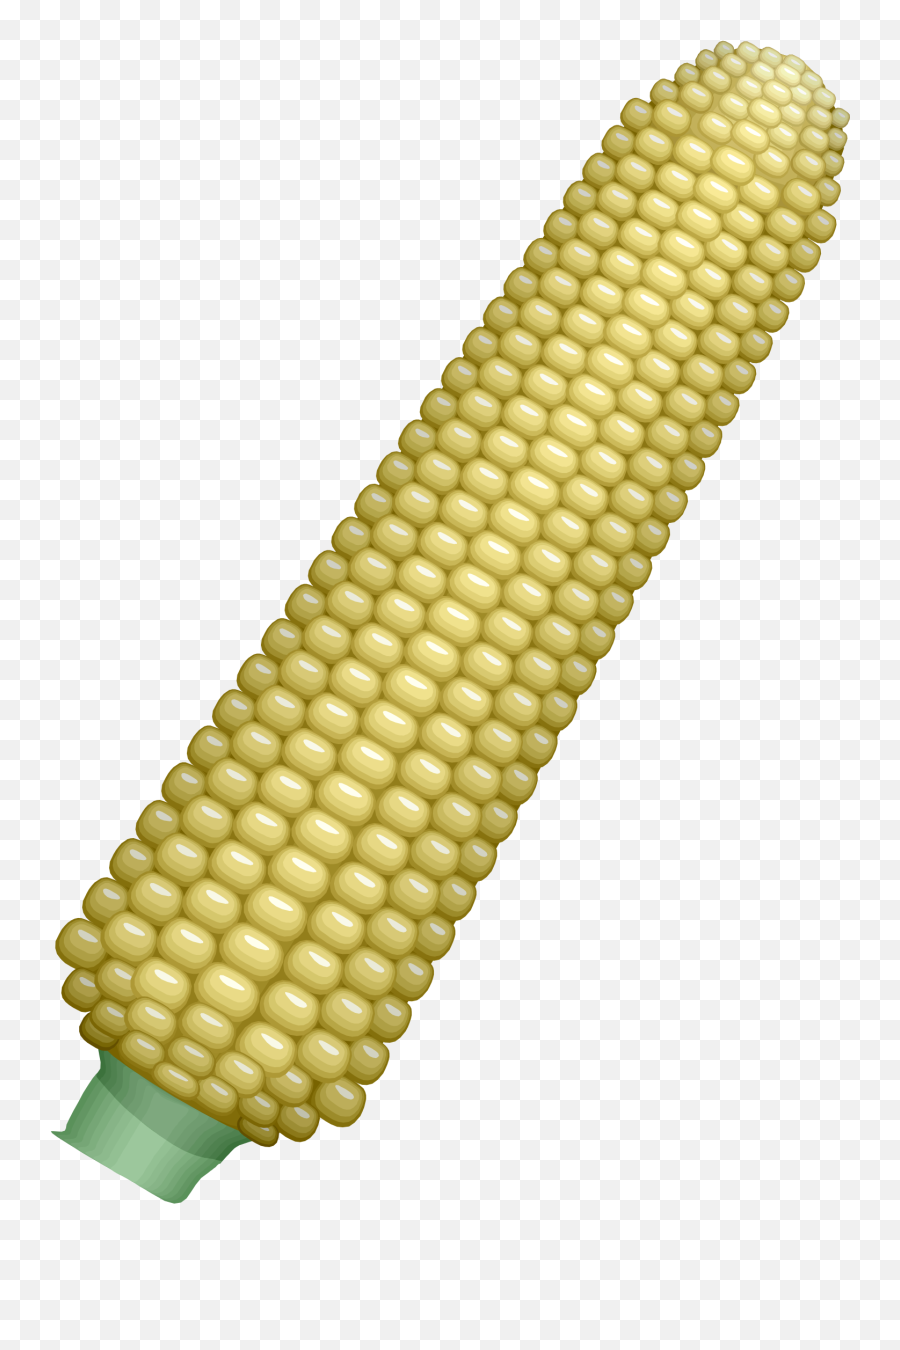 Ear Of Corn Vector Clipart Image - Selfridges Emoji,Beer Moon Emoji